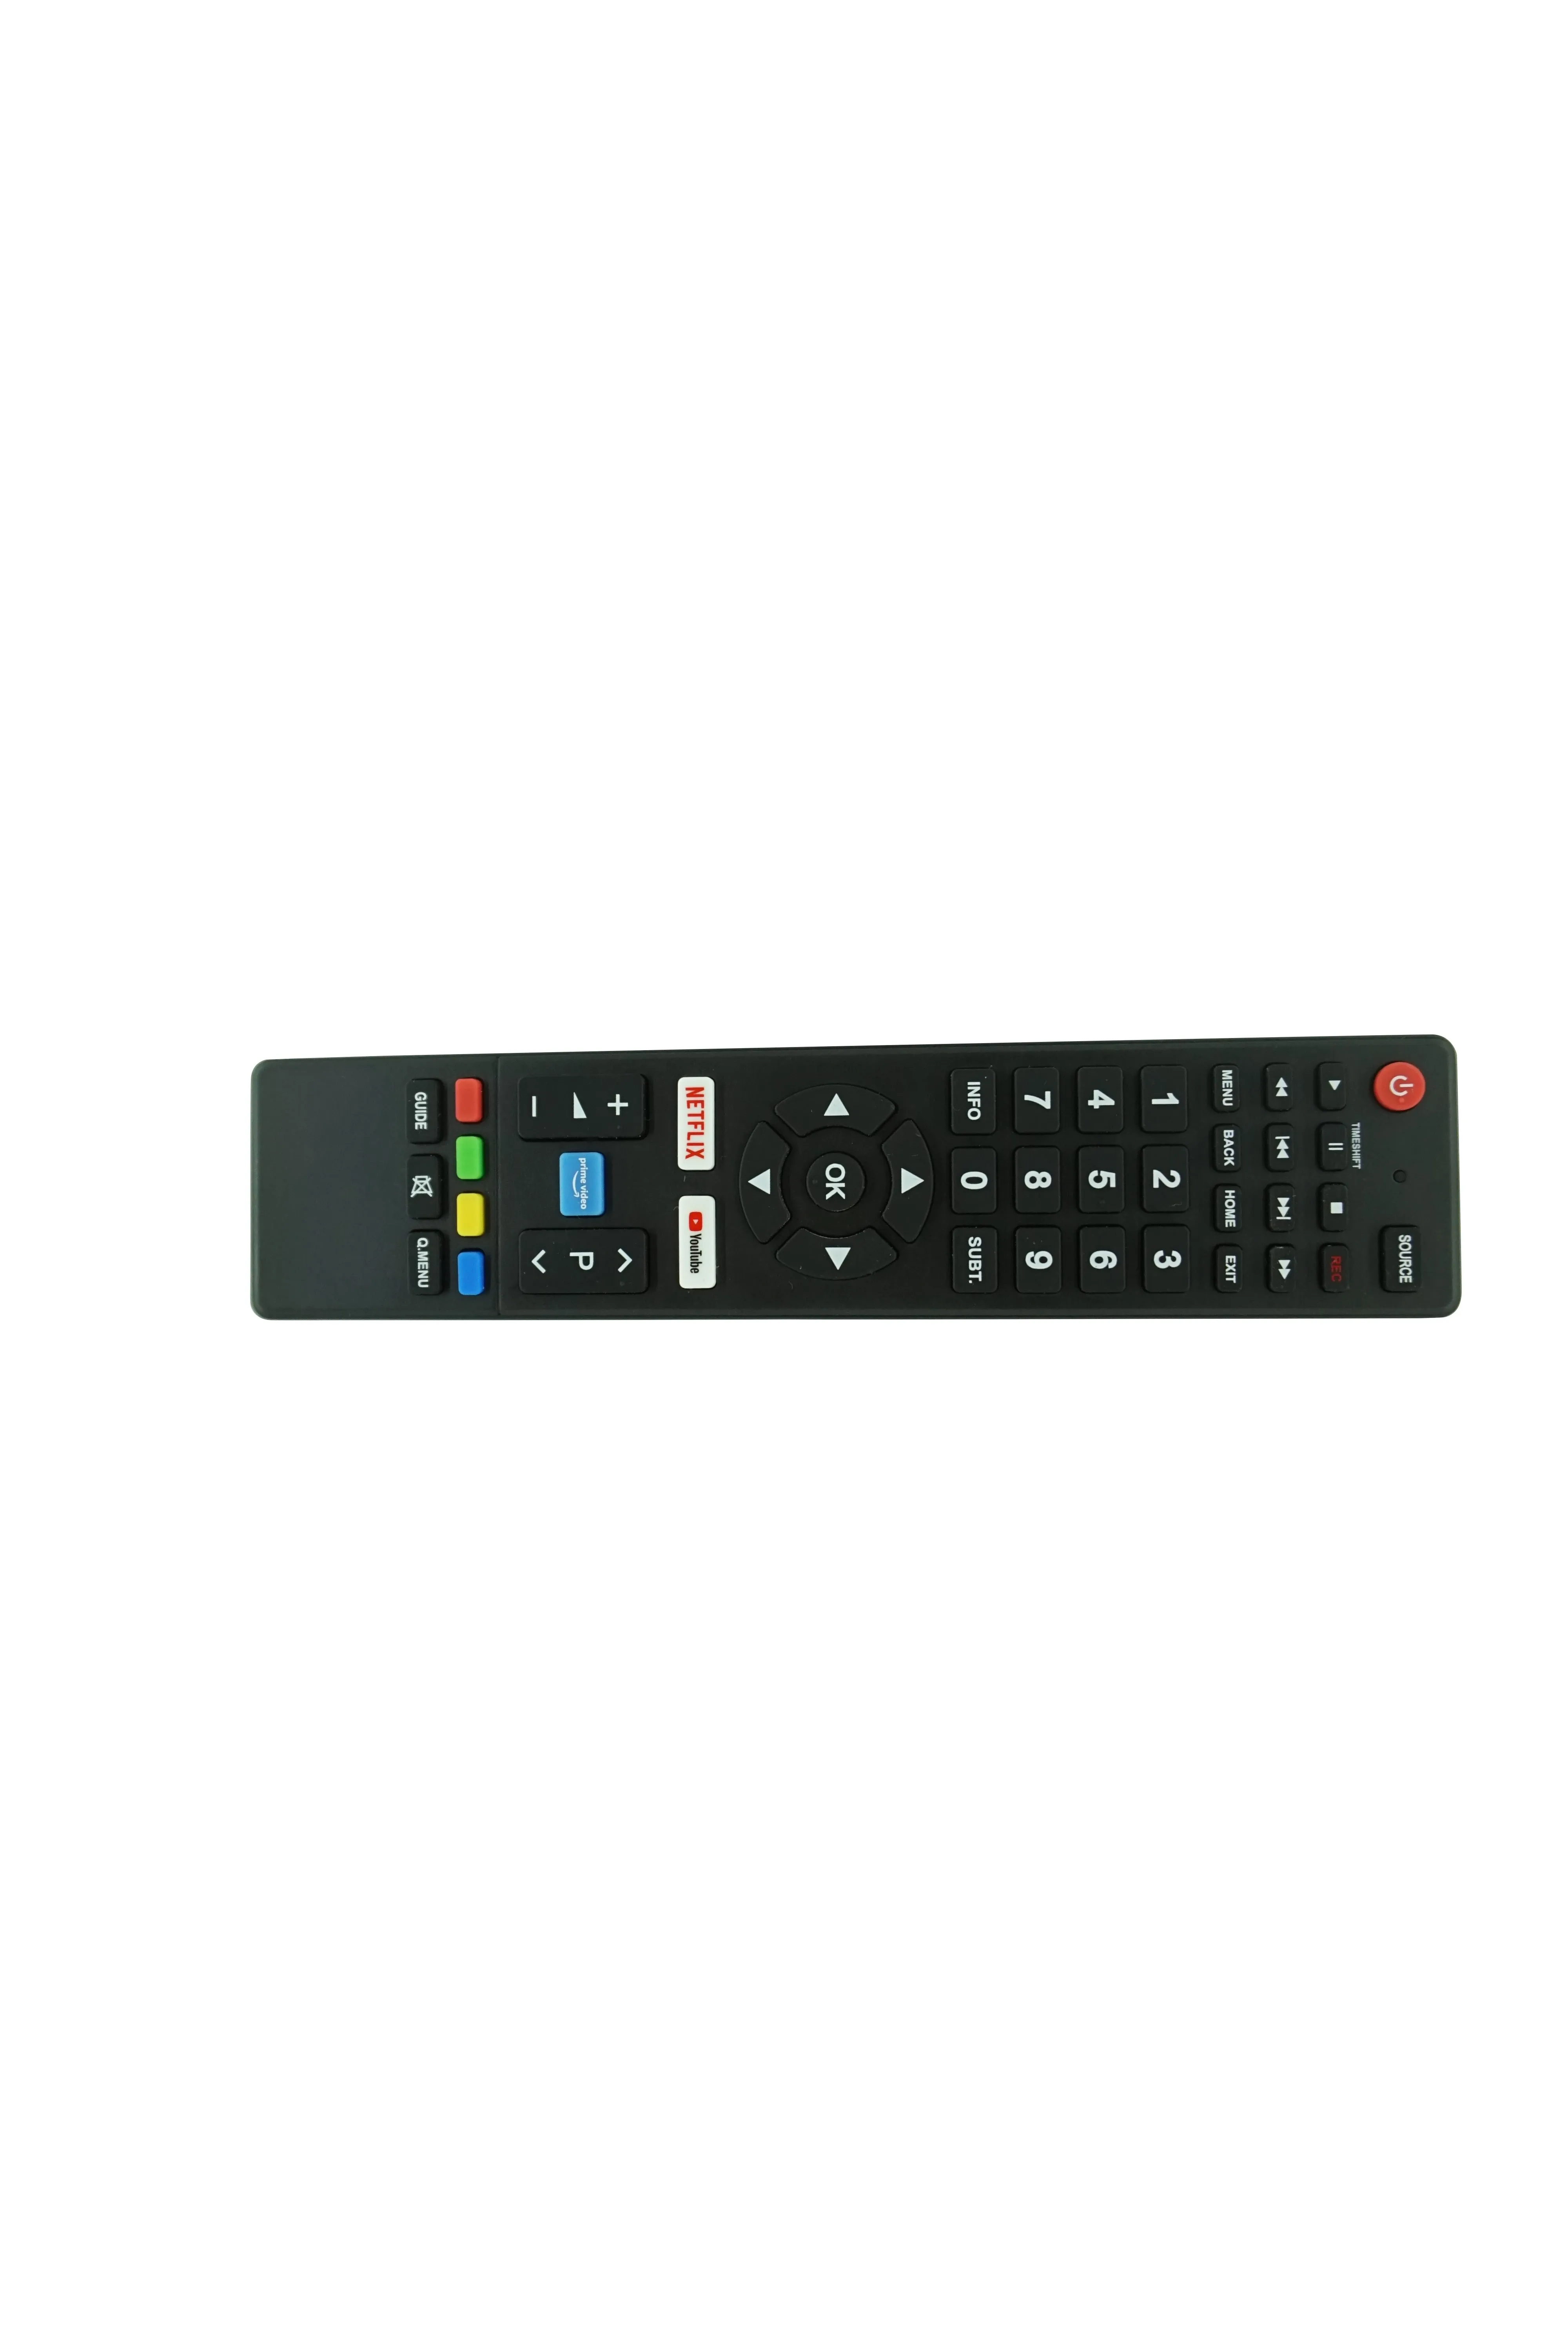 Remote Control For CHIQ GCBLTV6EA-C4 U75G8 U70G8 U65G6 U58E7 U55G7 U55G6 U50G6 L43G5 U50G9 U55H6 U65G9 U55G6000 U58G5500 U65G5500 Smart 4K UHD LED HDTV TV